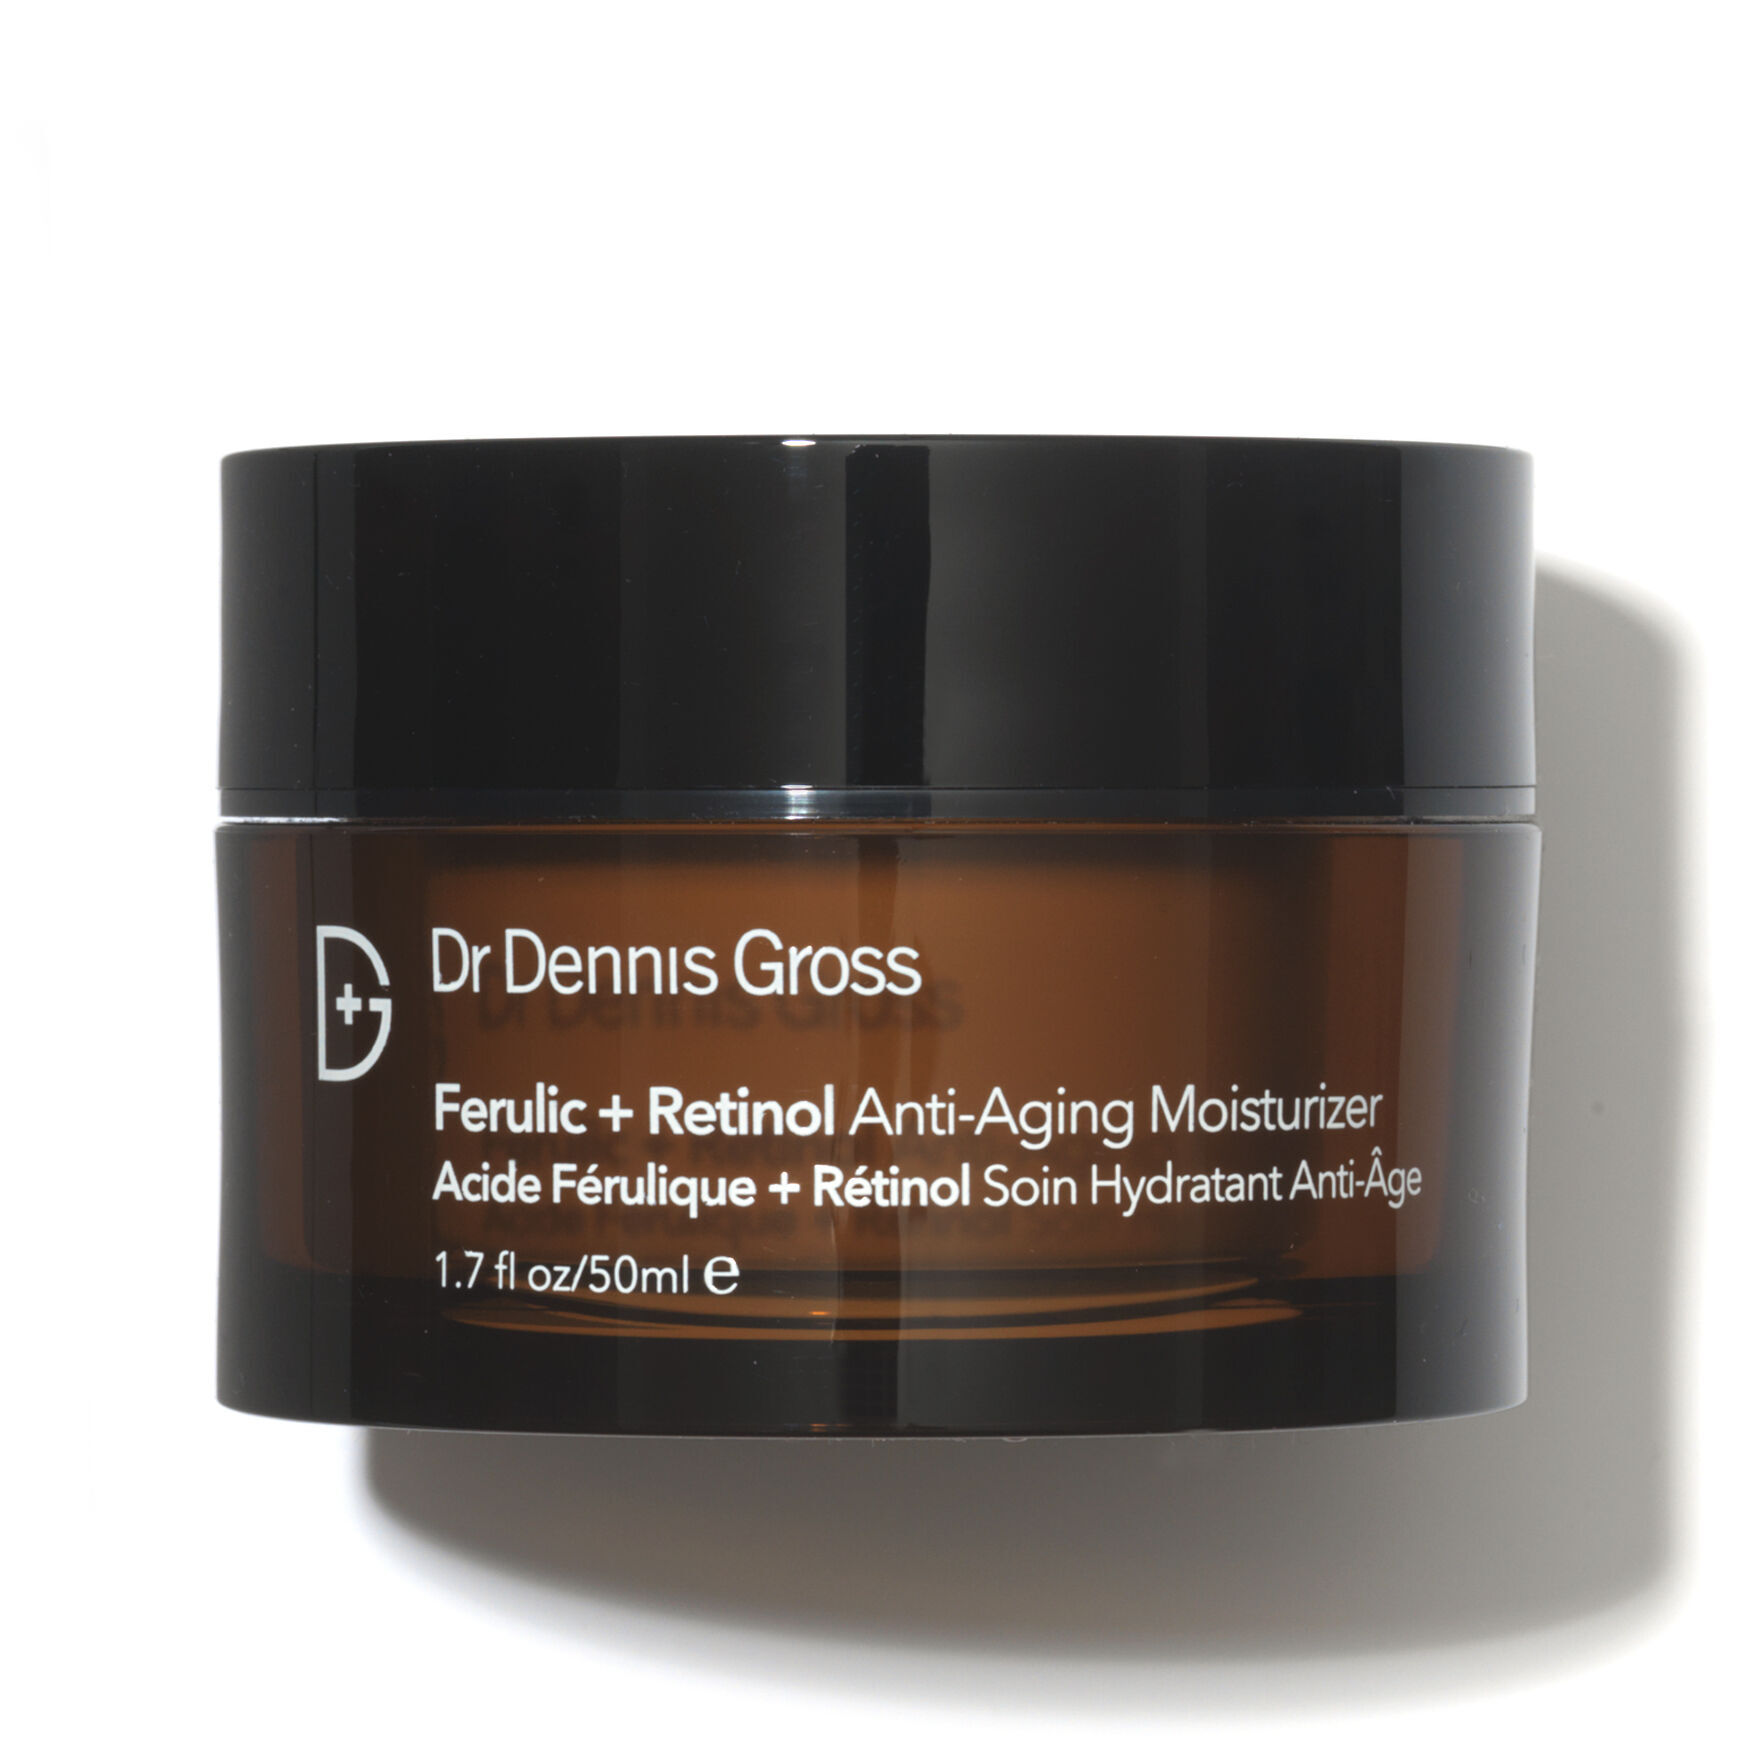 Dr Dennis Gross - Ferulic + Retinol Anti Aging Moisturiser by Dr Dennis Gross